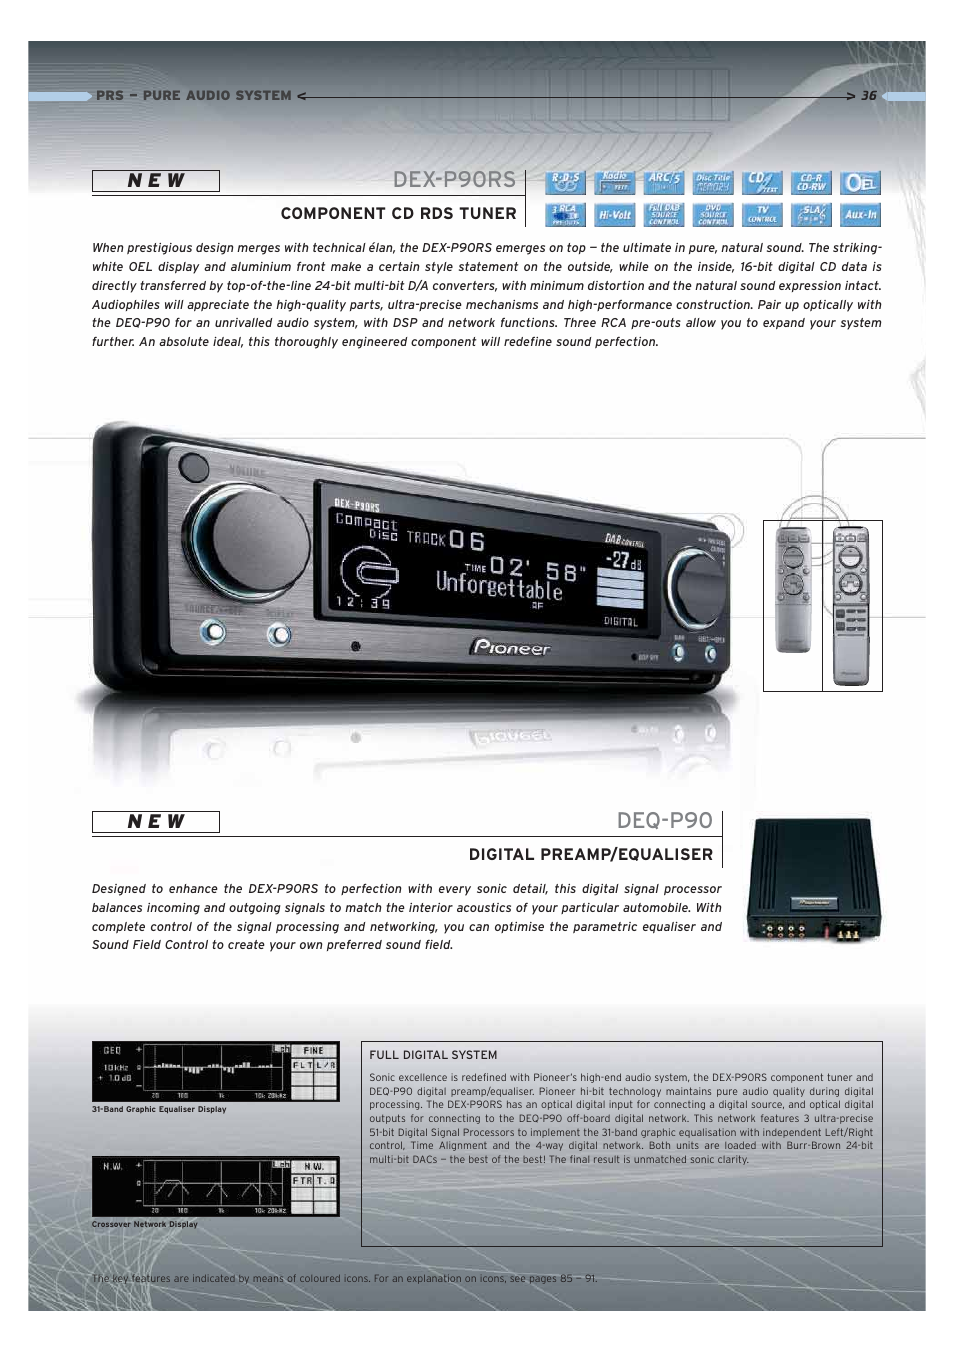 Dex-p90rs, Deq-p90, N e w | Pioneer Car CD MP3 Player User Manual | Page 36  / 39 | Original mode